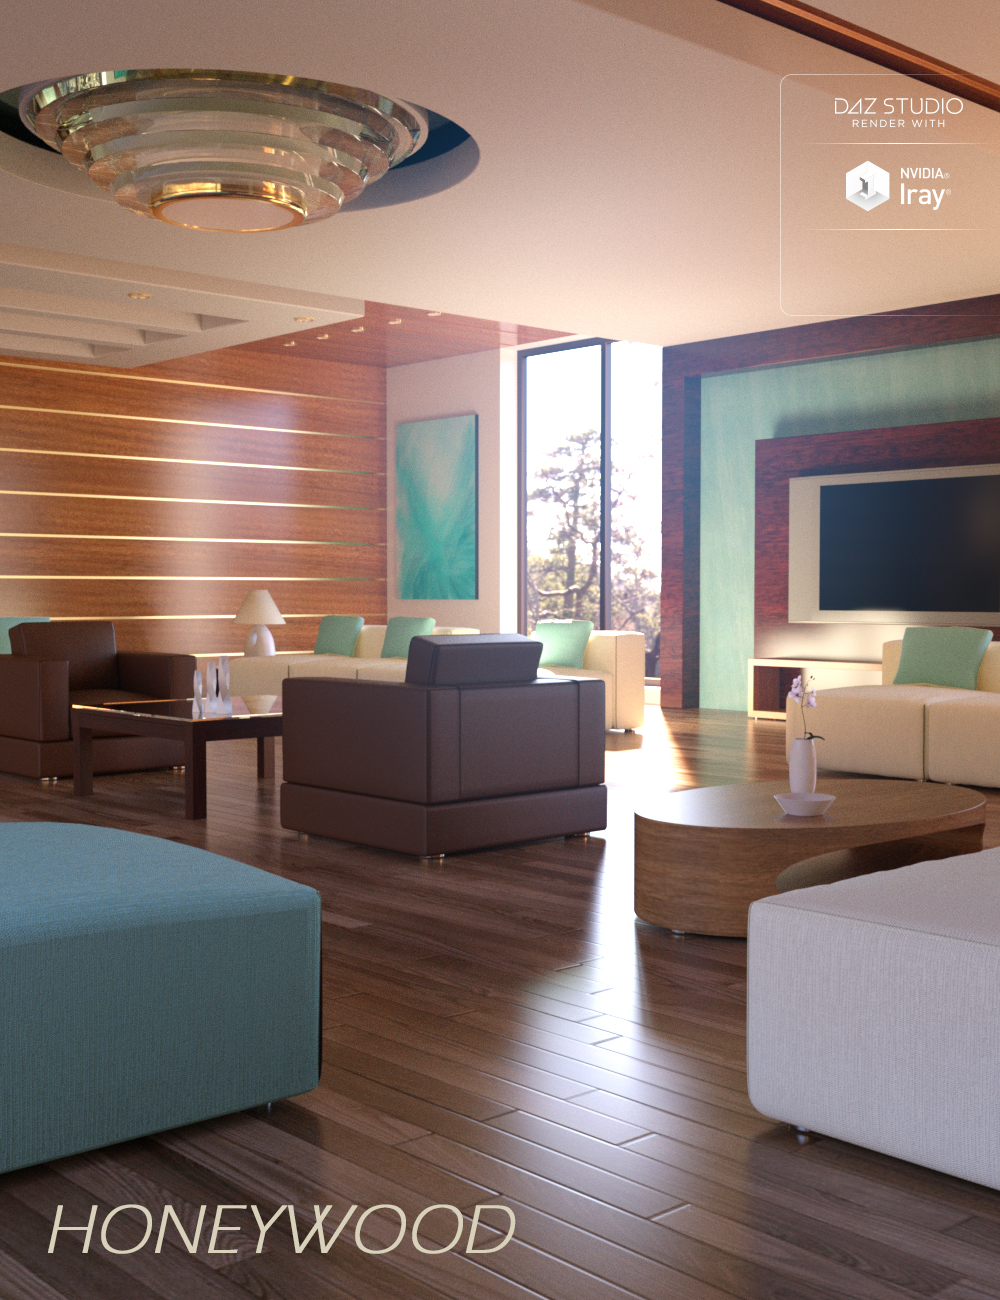 Honeywood Living Room by: Human, 3D Models by Daz 3D